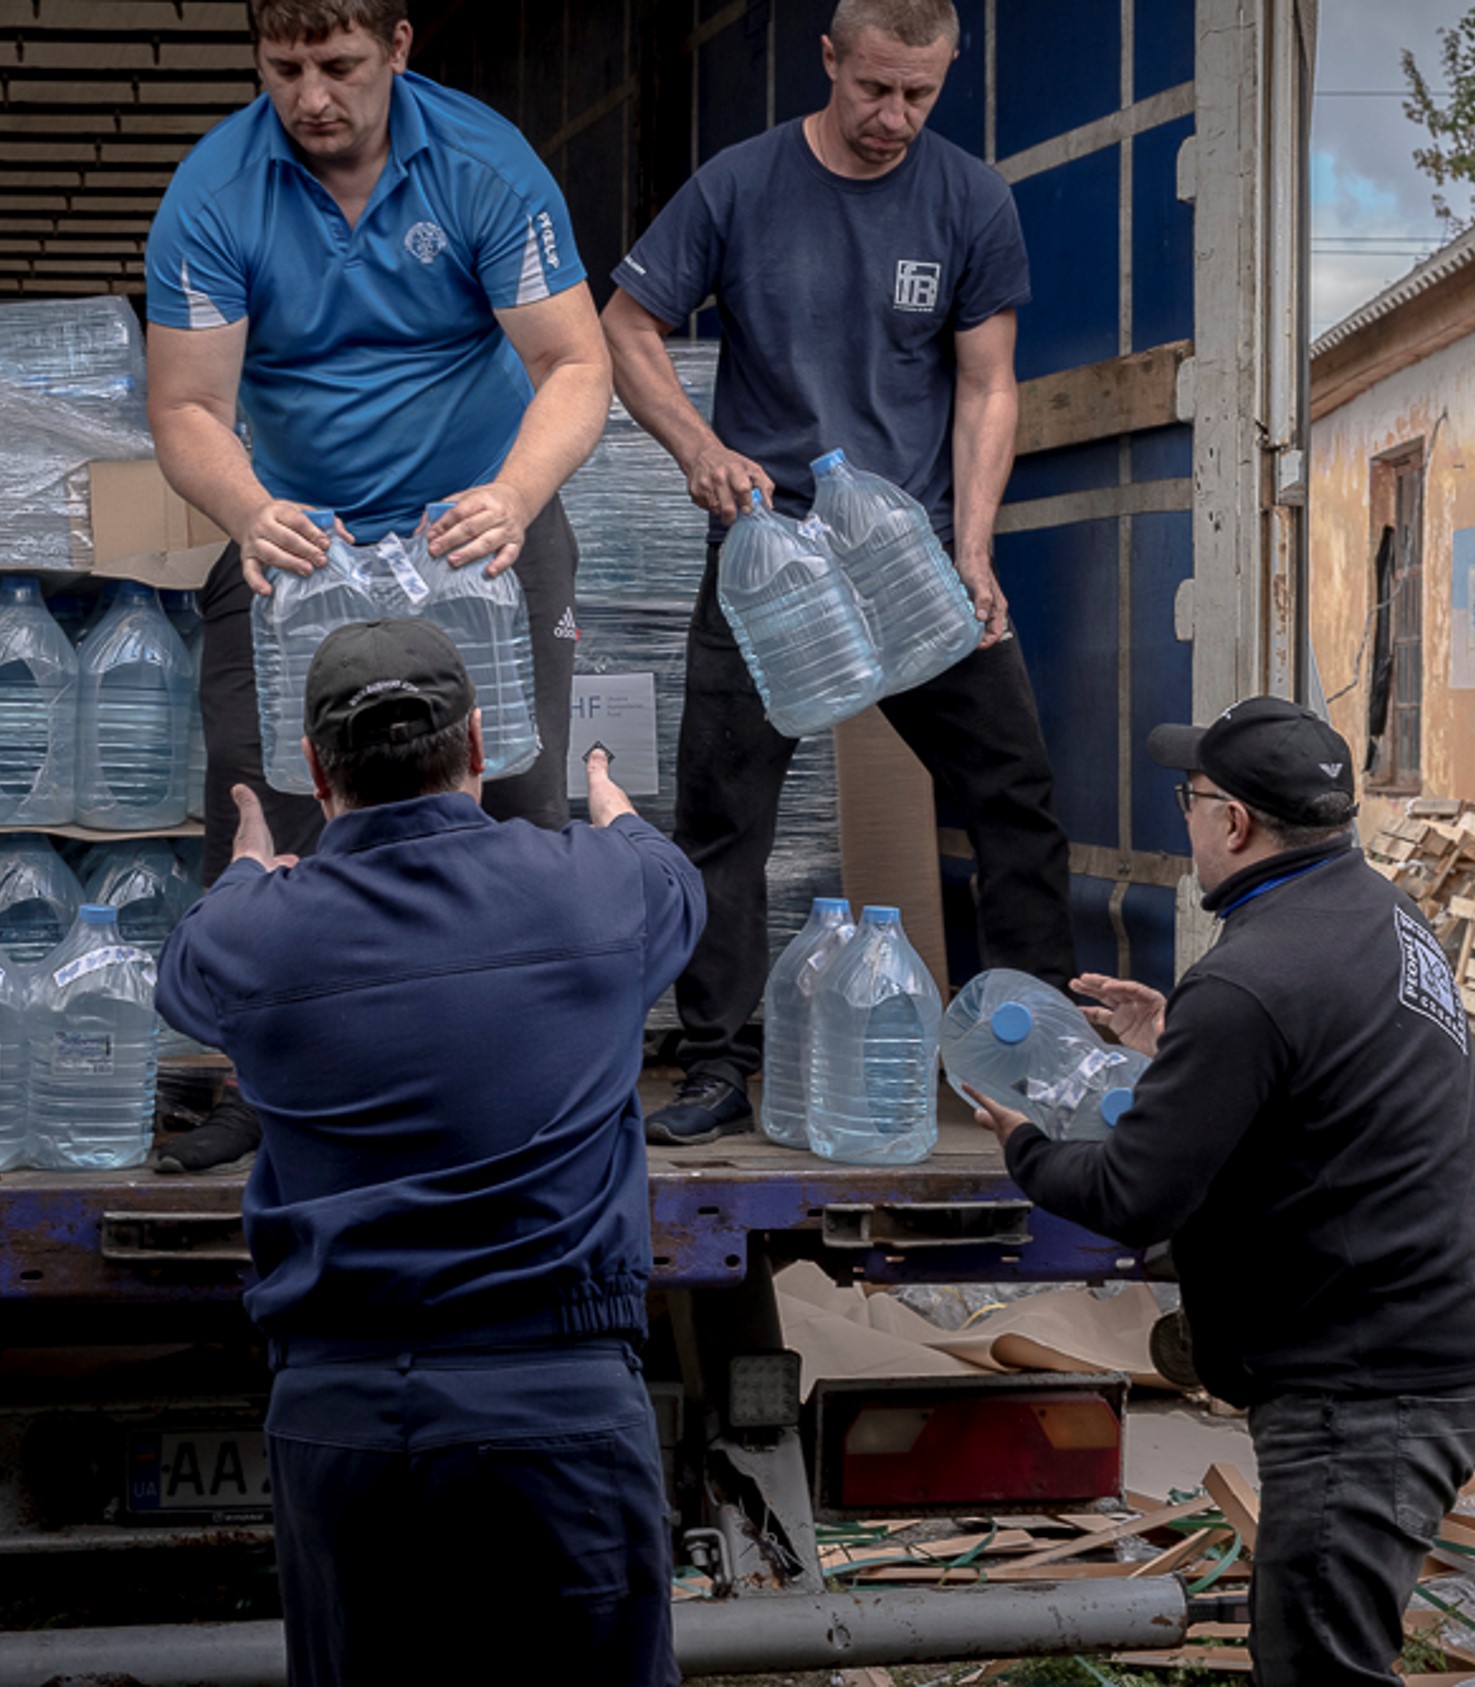 men off loading water bottles from a truck